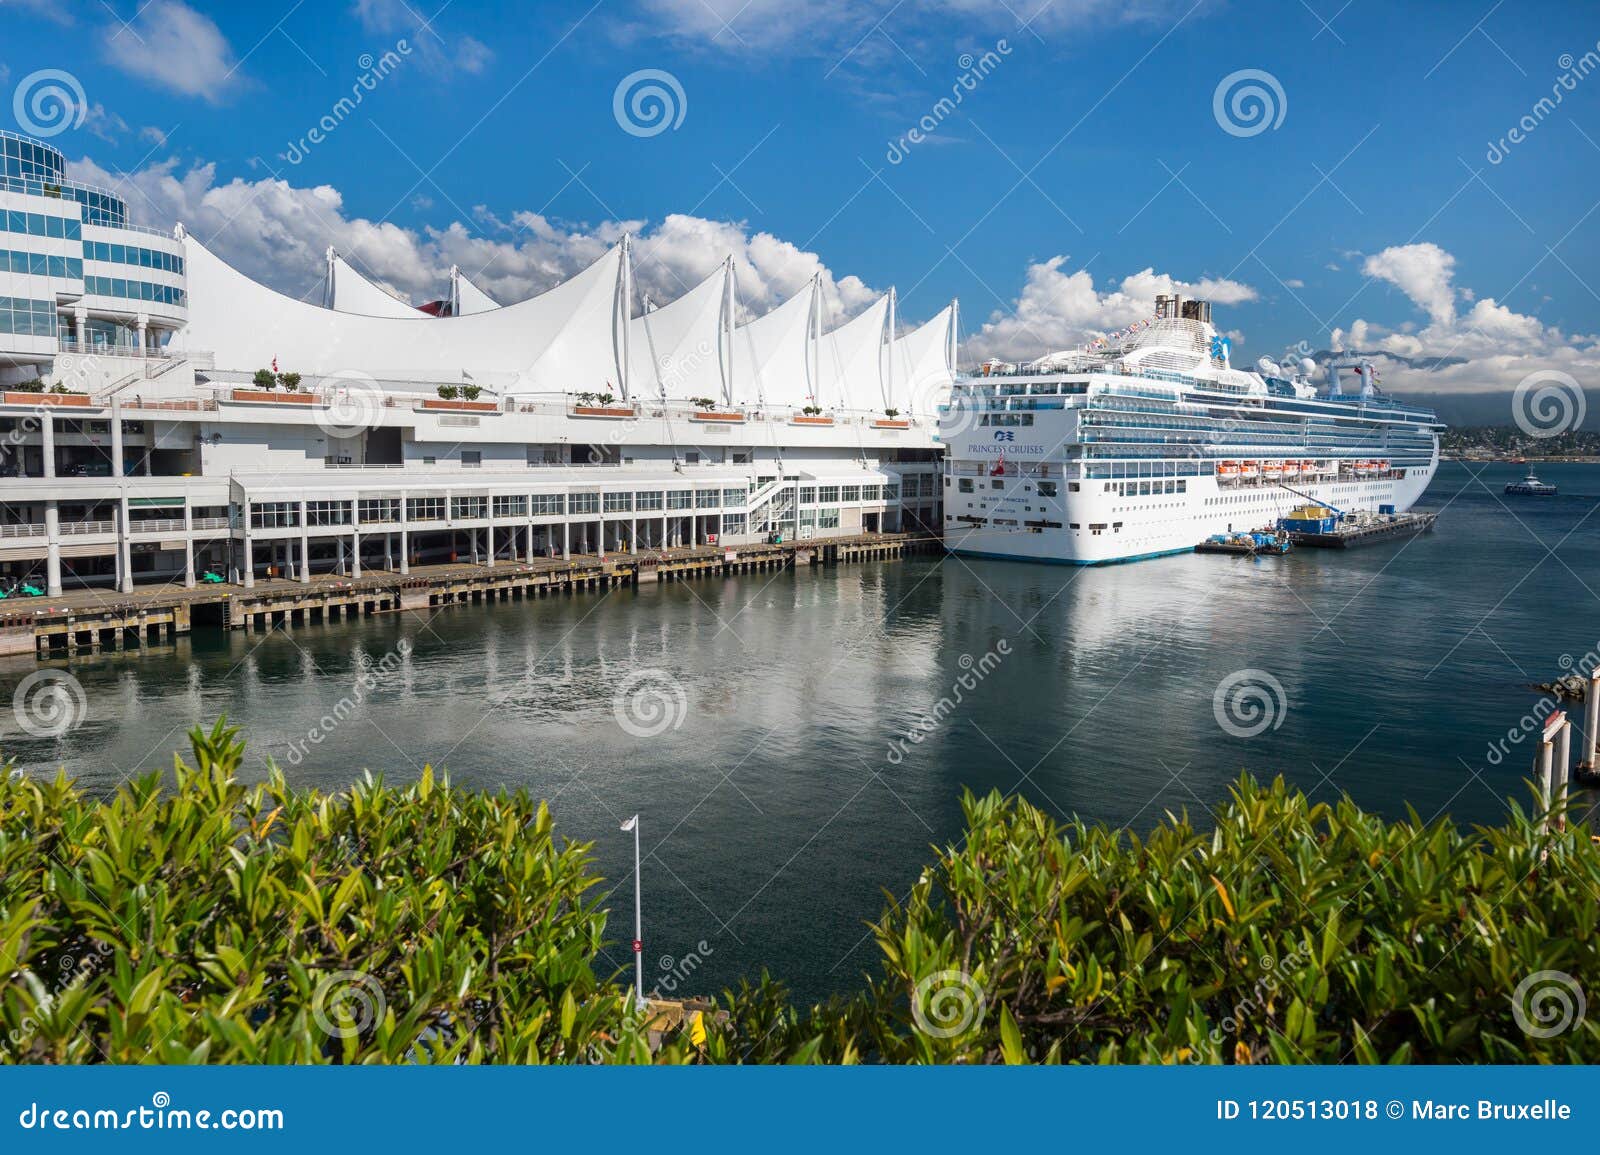 island princess cruise terminal